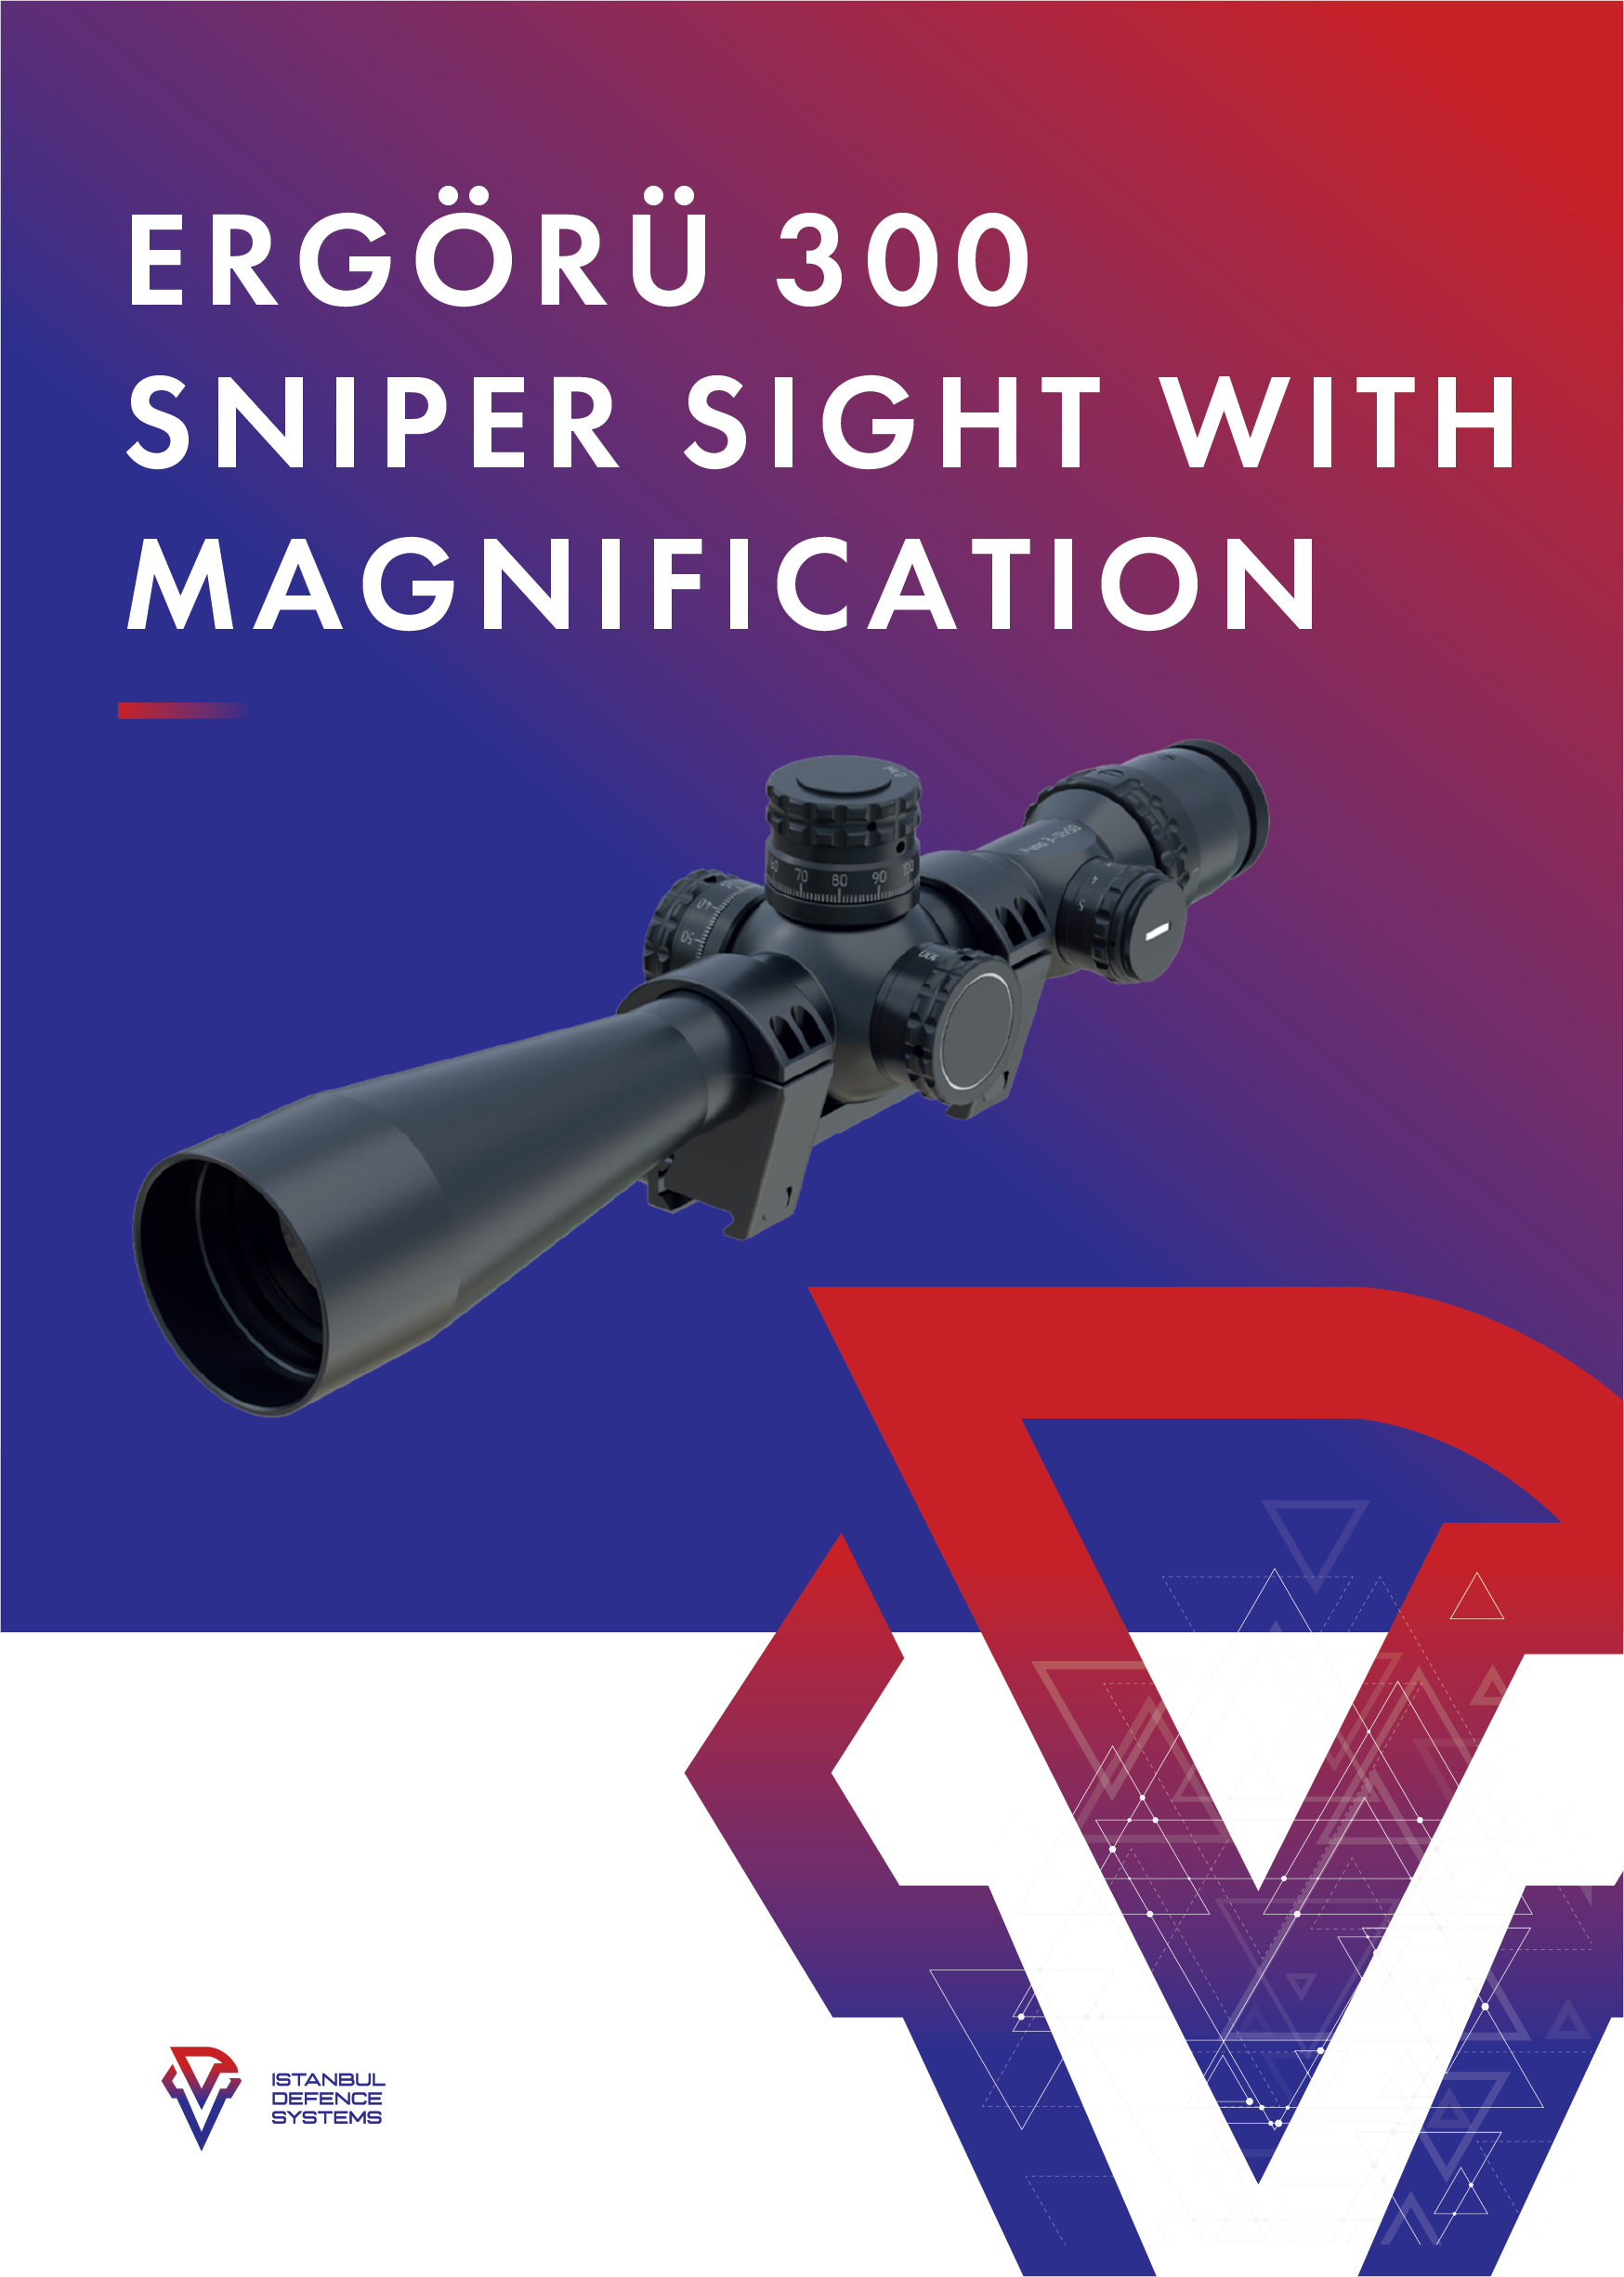 ergoru-300-sniper-sight_1@4x.png